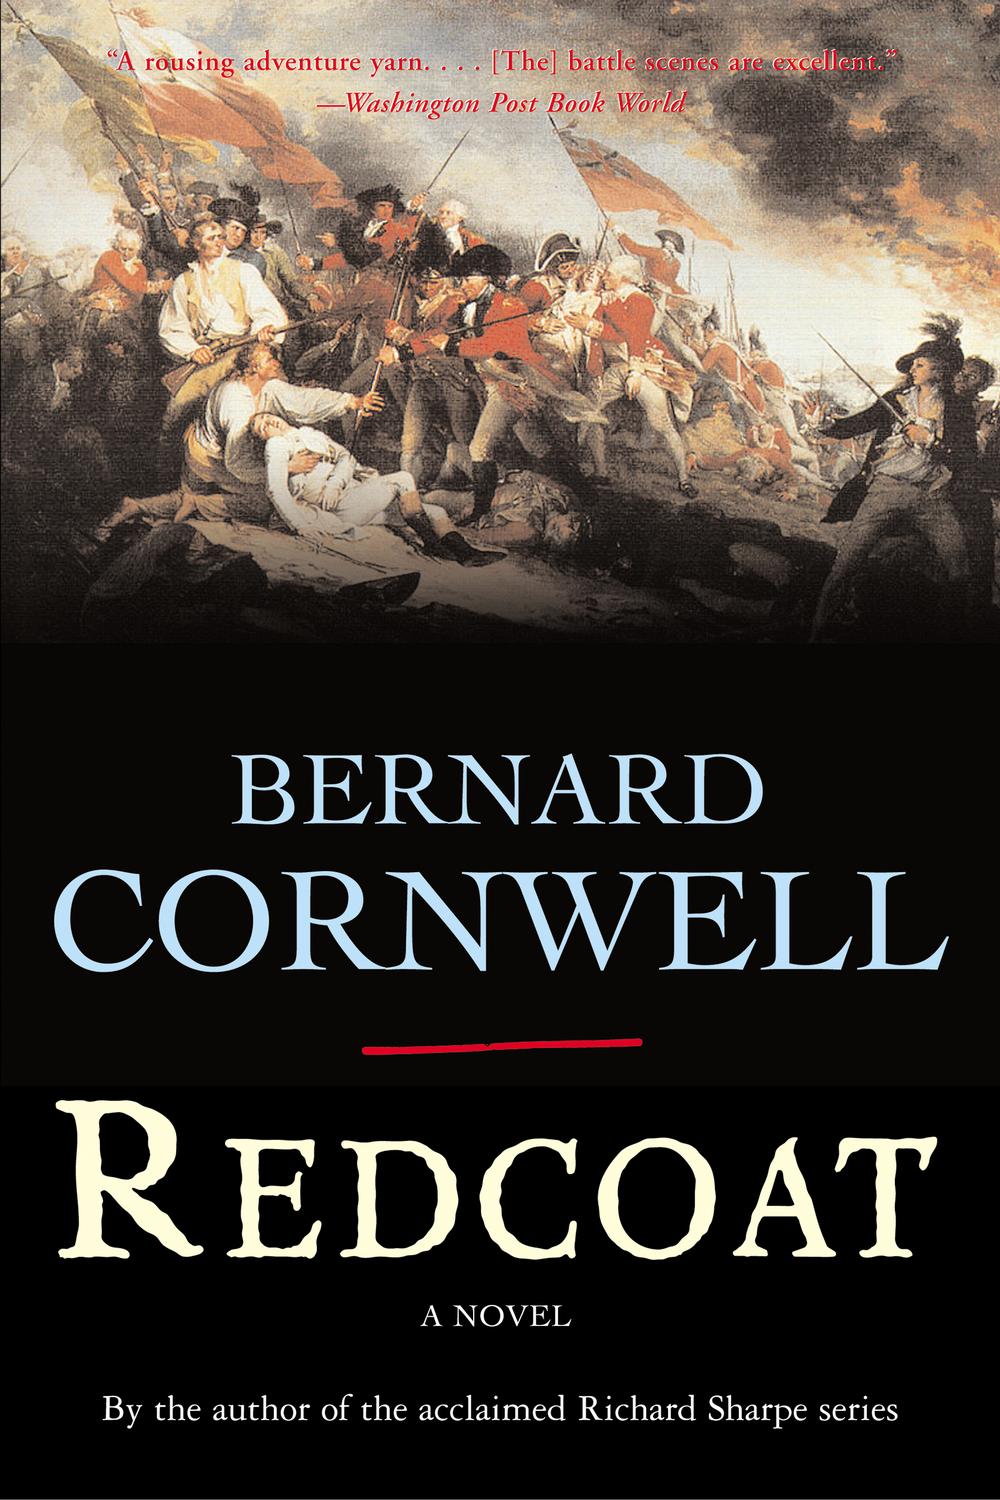 Redcoat - Bernard Cornwell